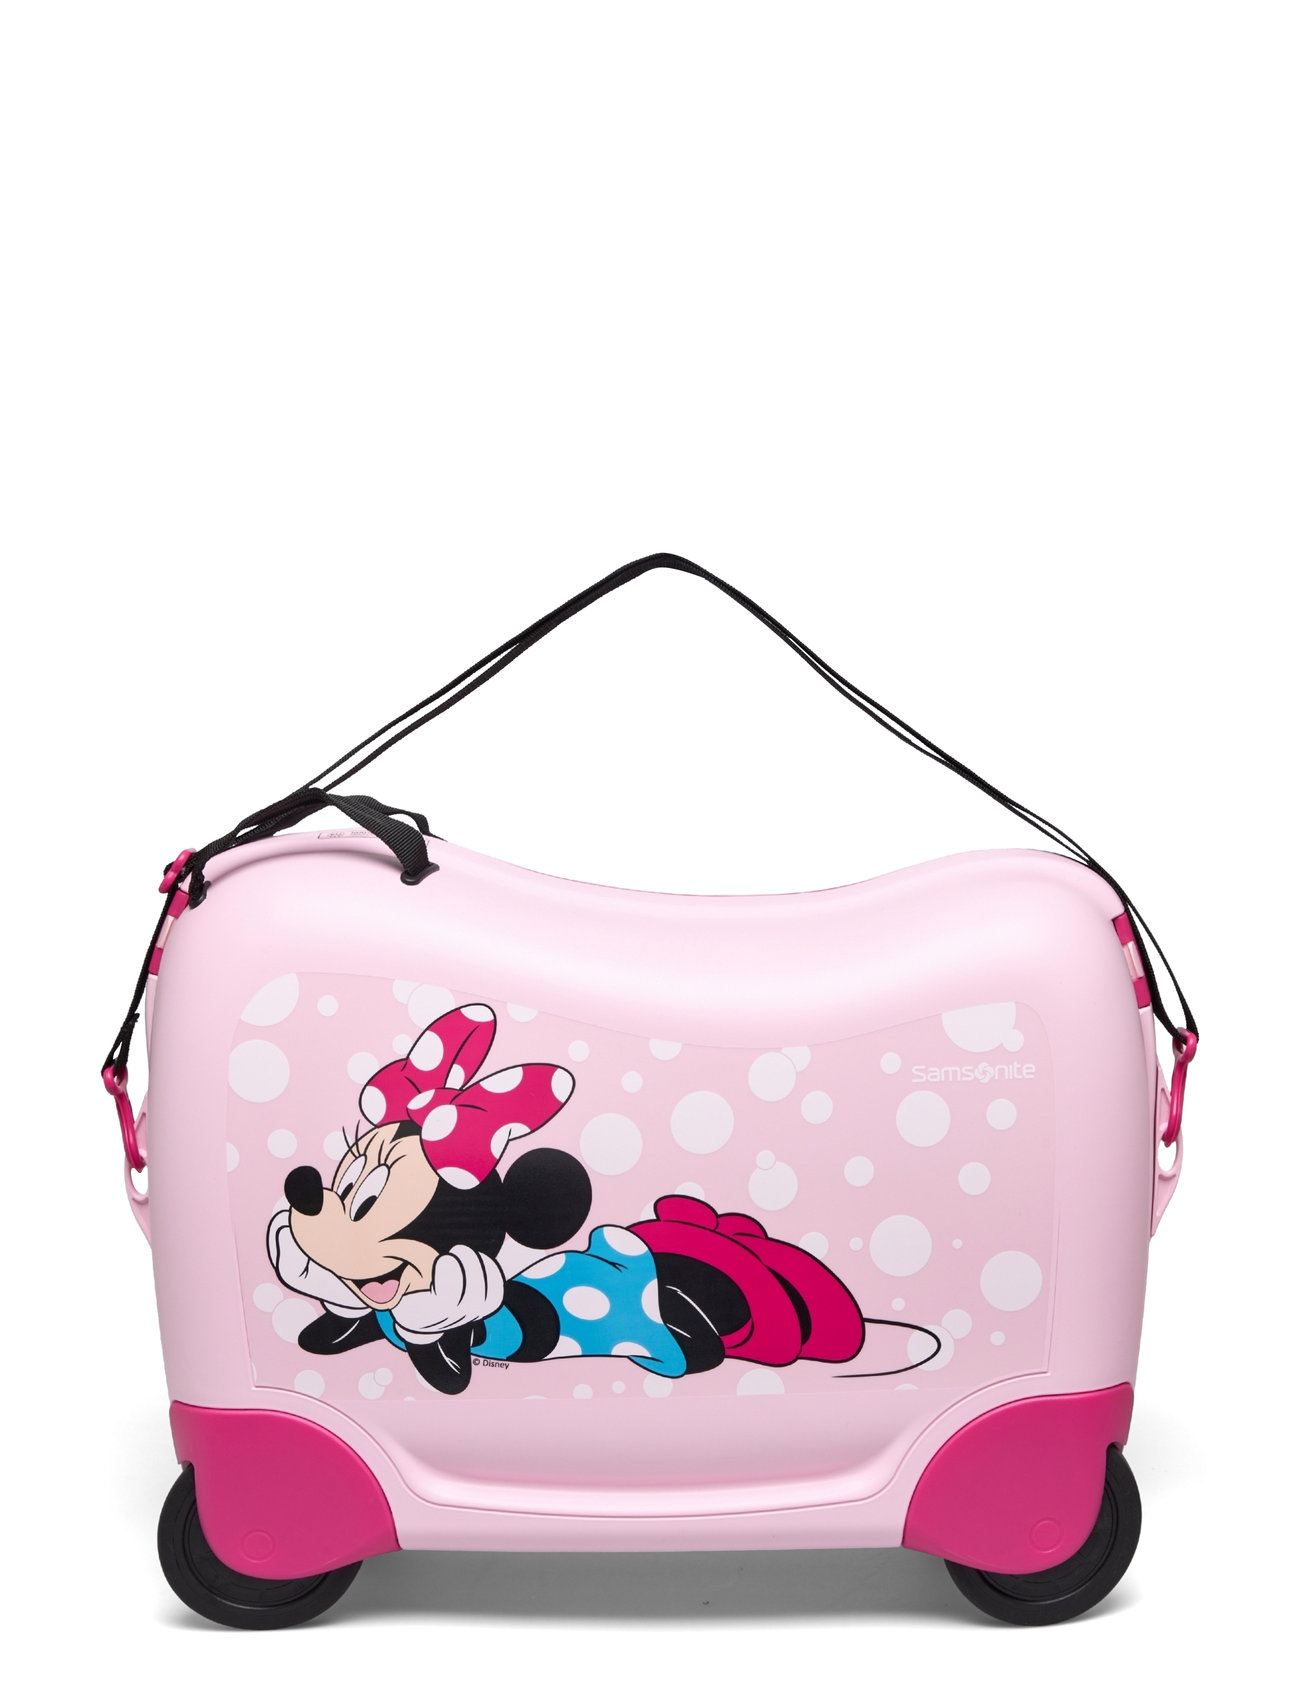 Dream2Go Ride-On Suitecase Disney Cars Accessories Bags Travel Bags Pink Samsonite